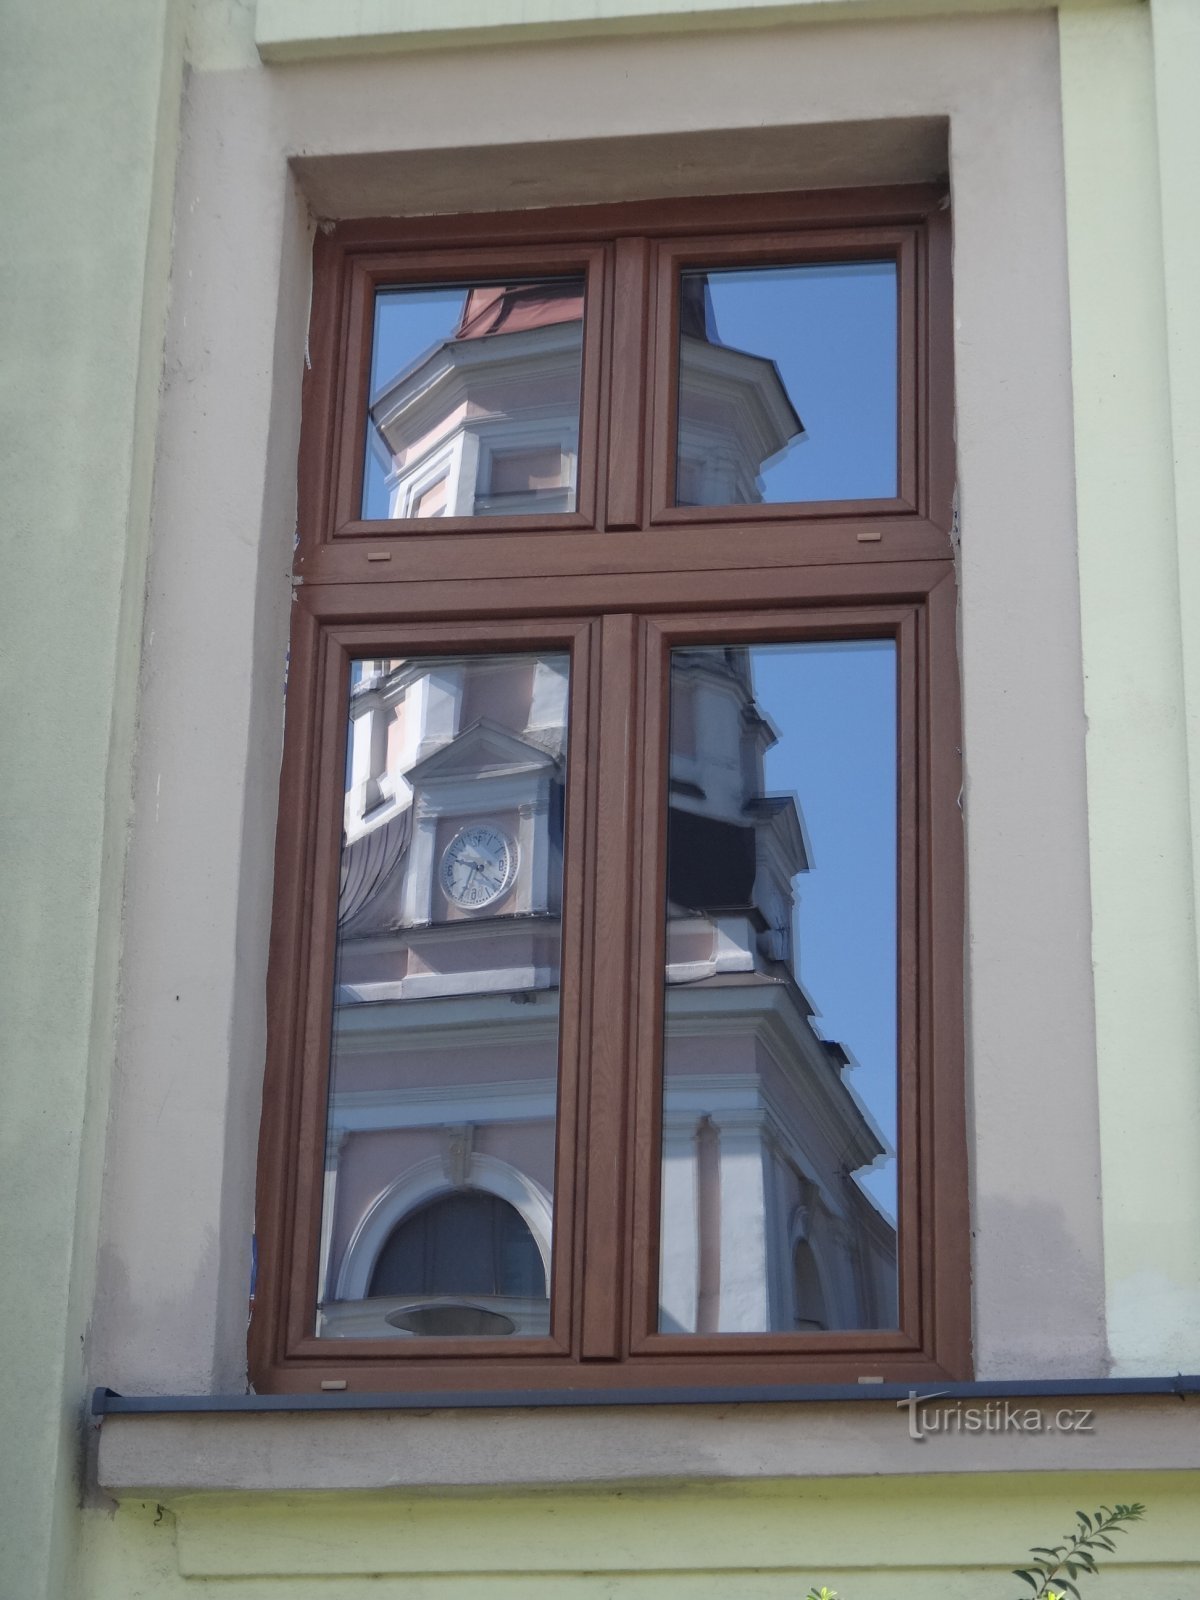 o reflexo da igreja nas janelas da prefeitura